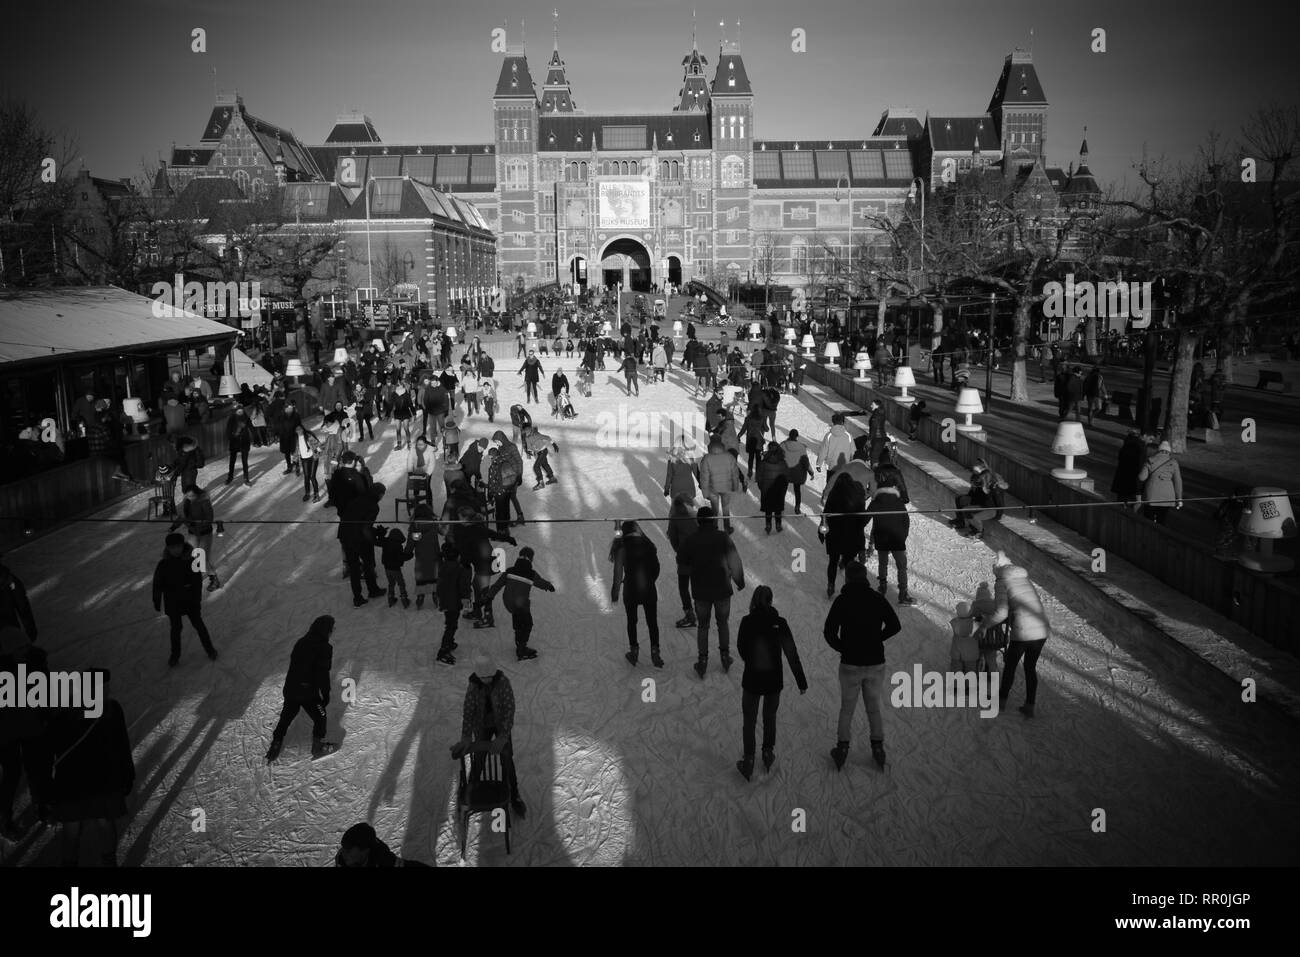 amsterdam - museum square ice skating 2019 Stock Photo